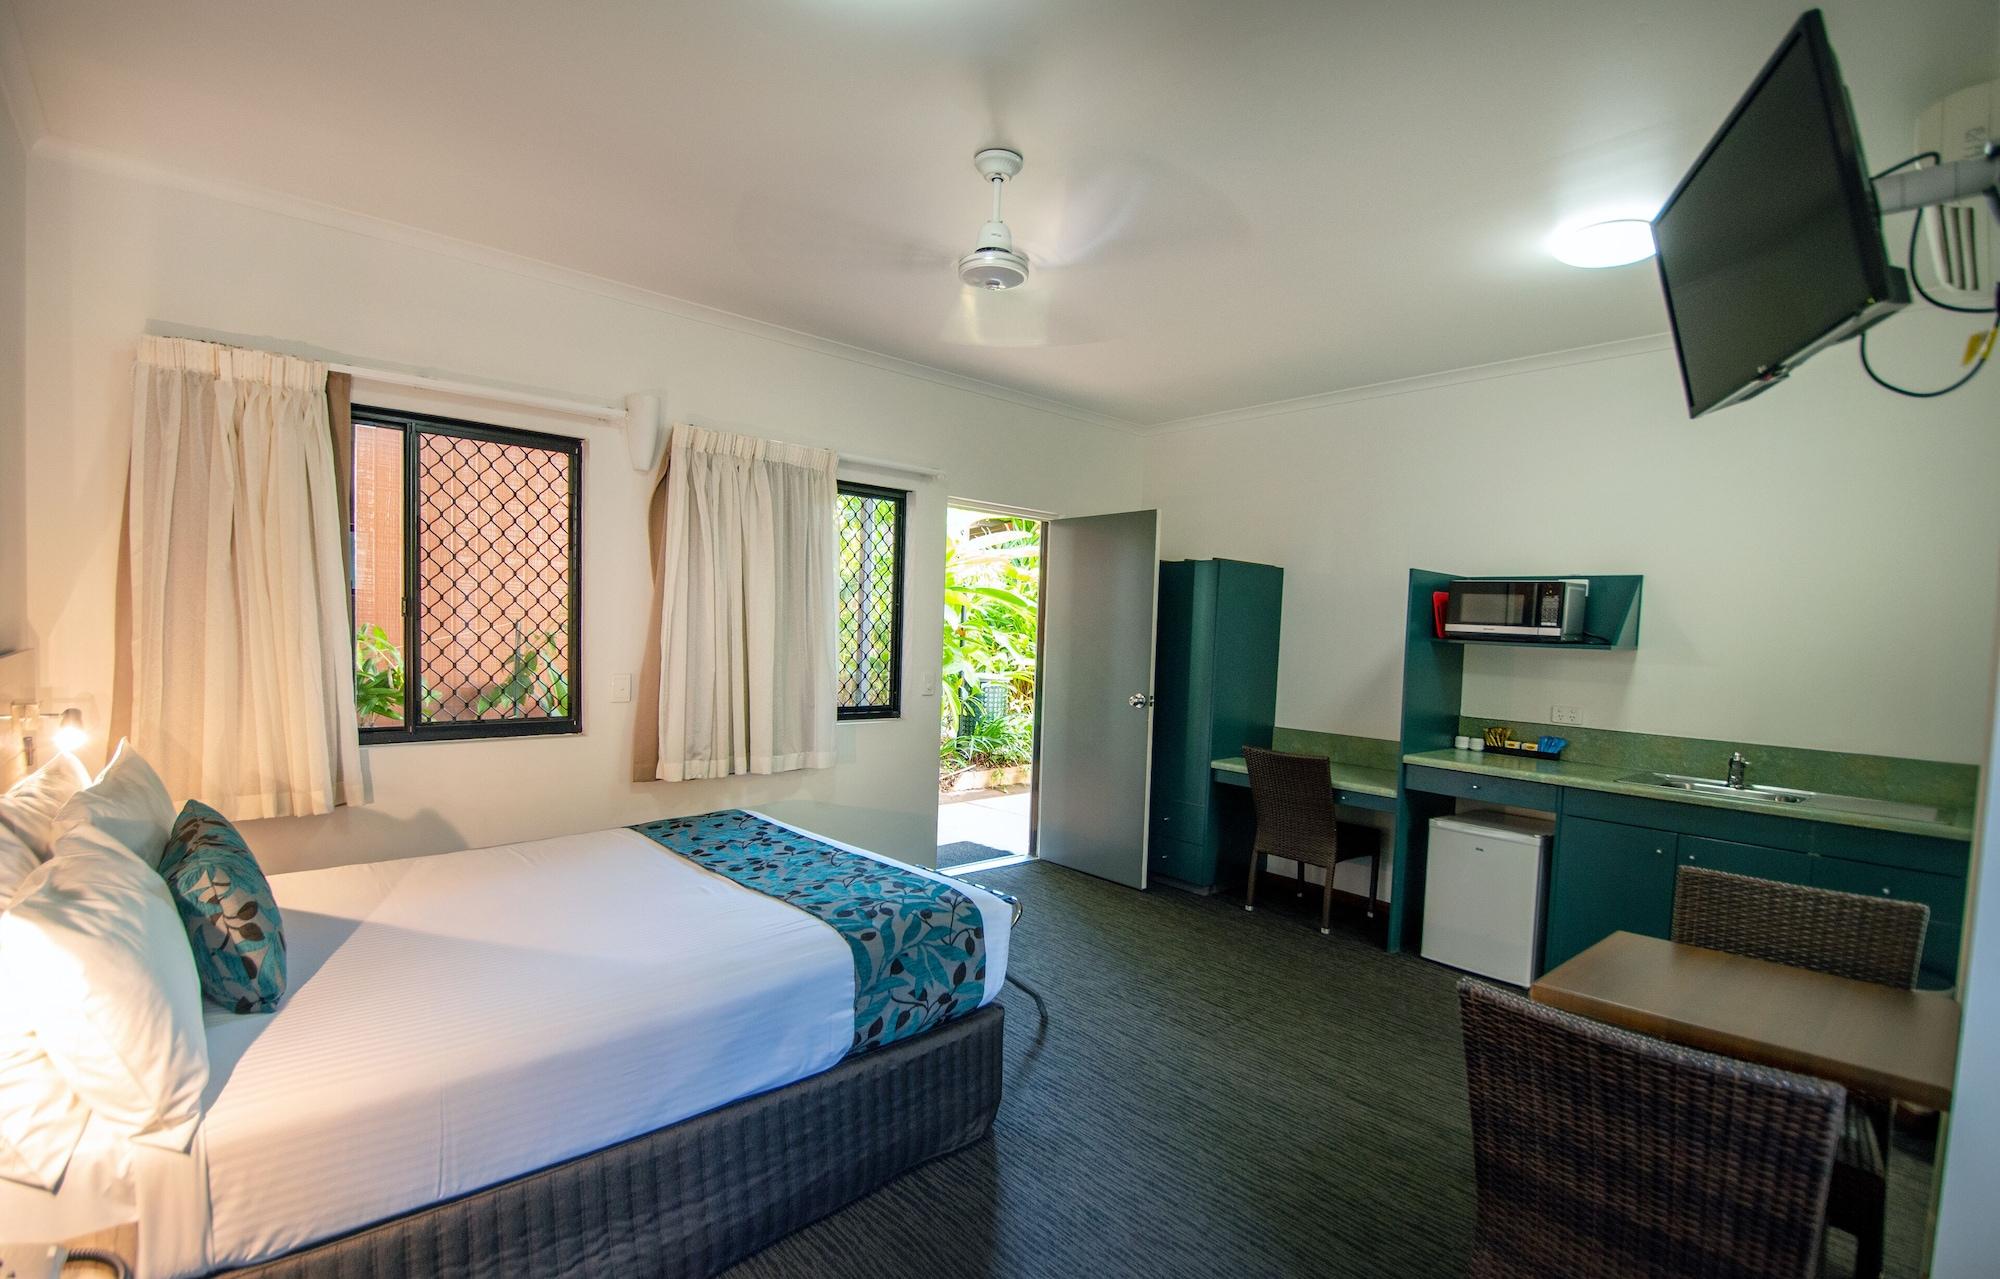 Palms City Resort Darwin Exterior photo